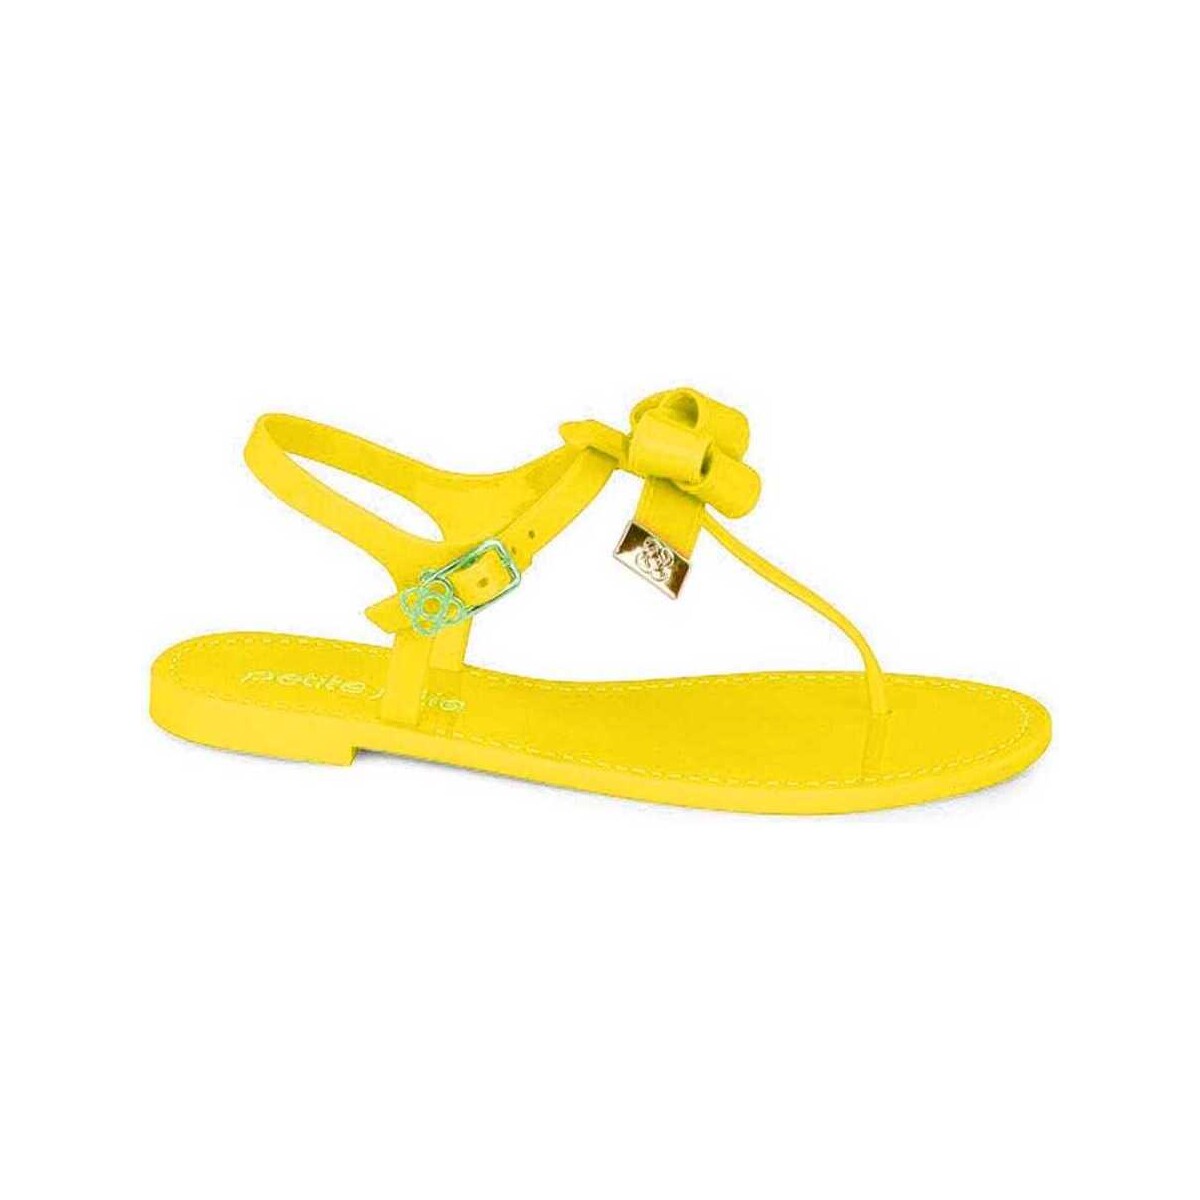 Sapatos Mulher Functies Crono CX0712570C shoes CG-1-21 MTB MTB-schoenen CX0712570C Shoes  By Parodi Yellow - 11/3732/01 